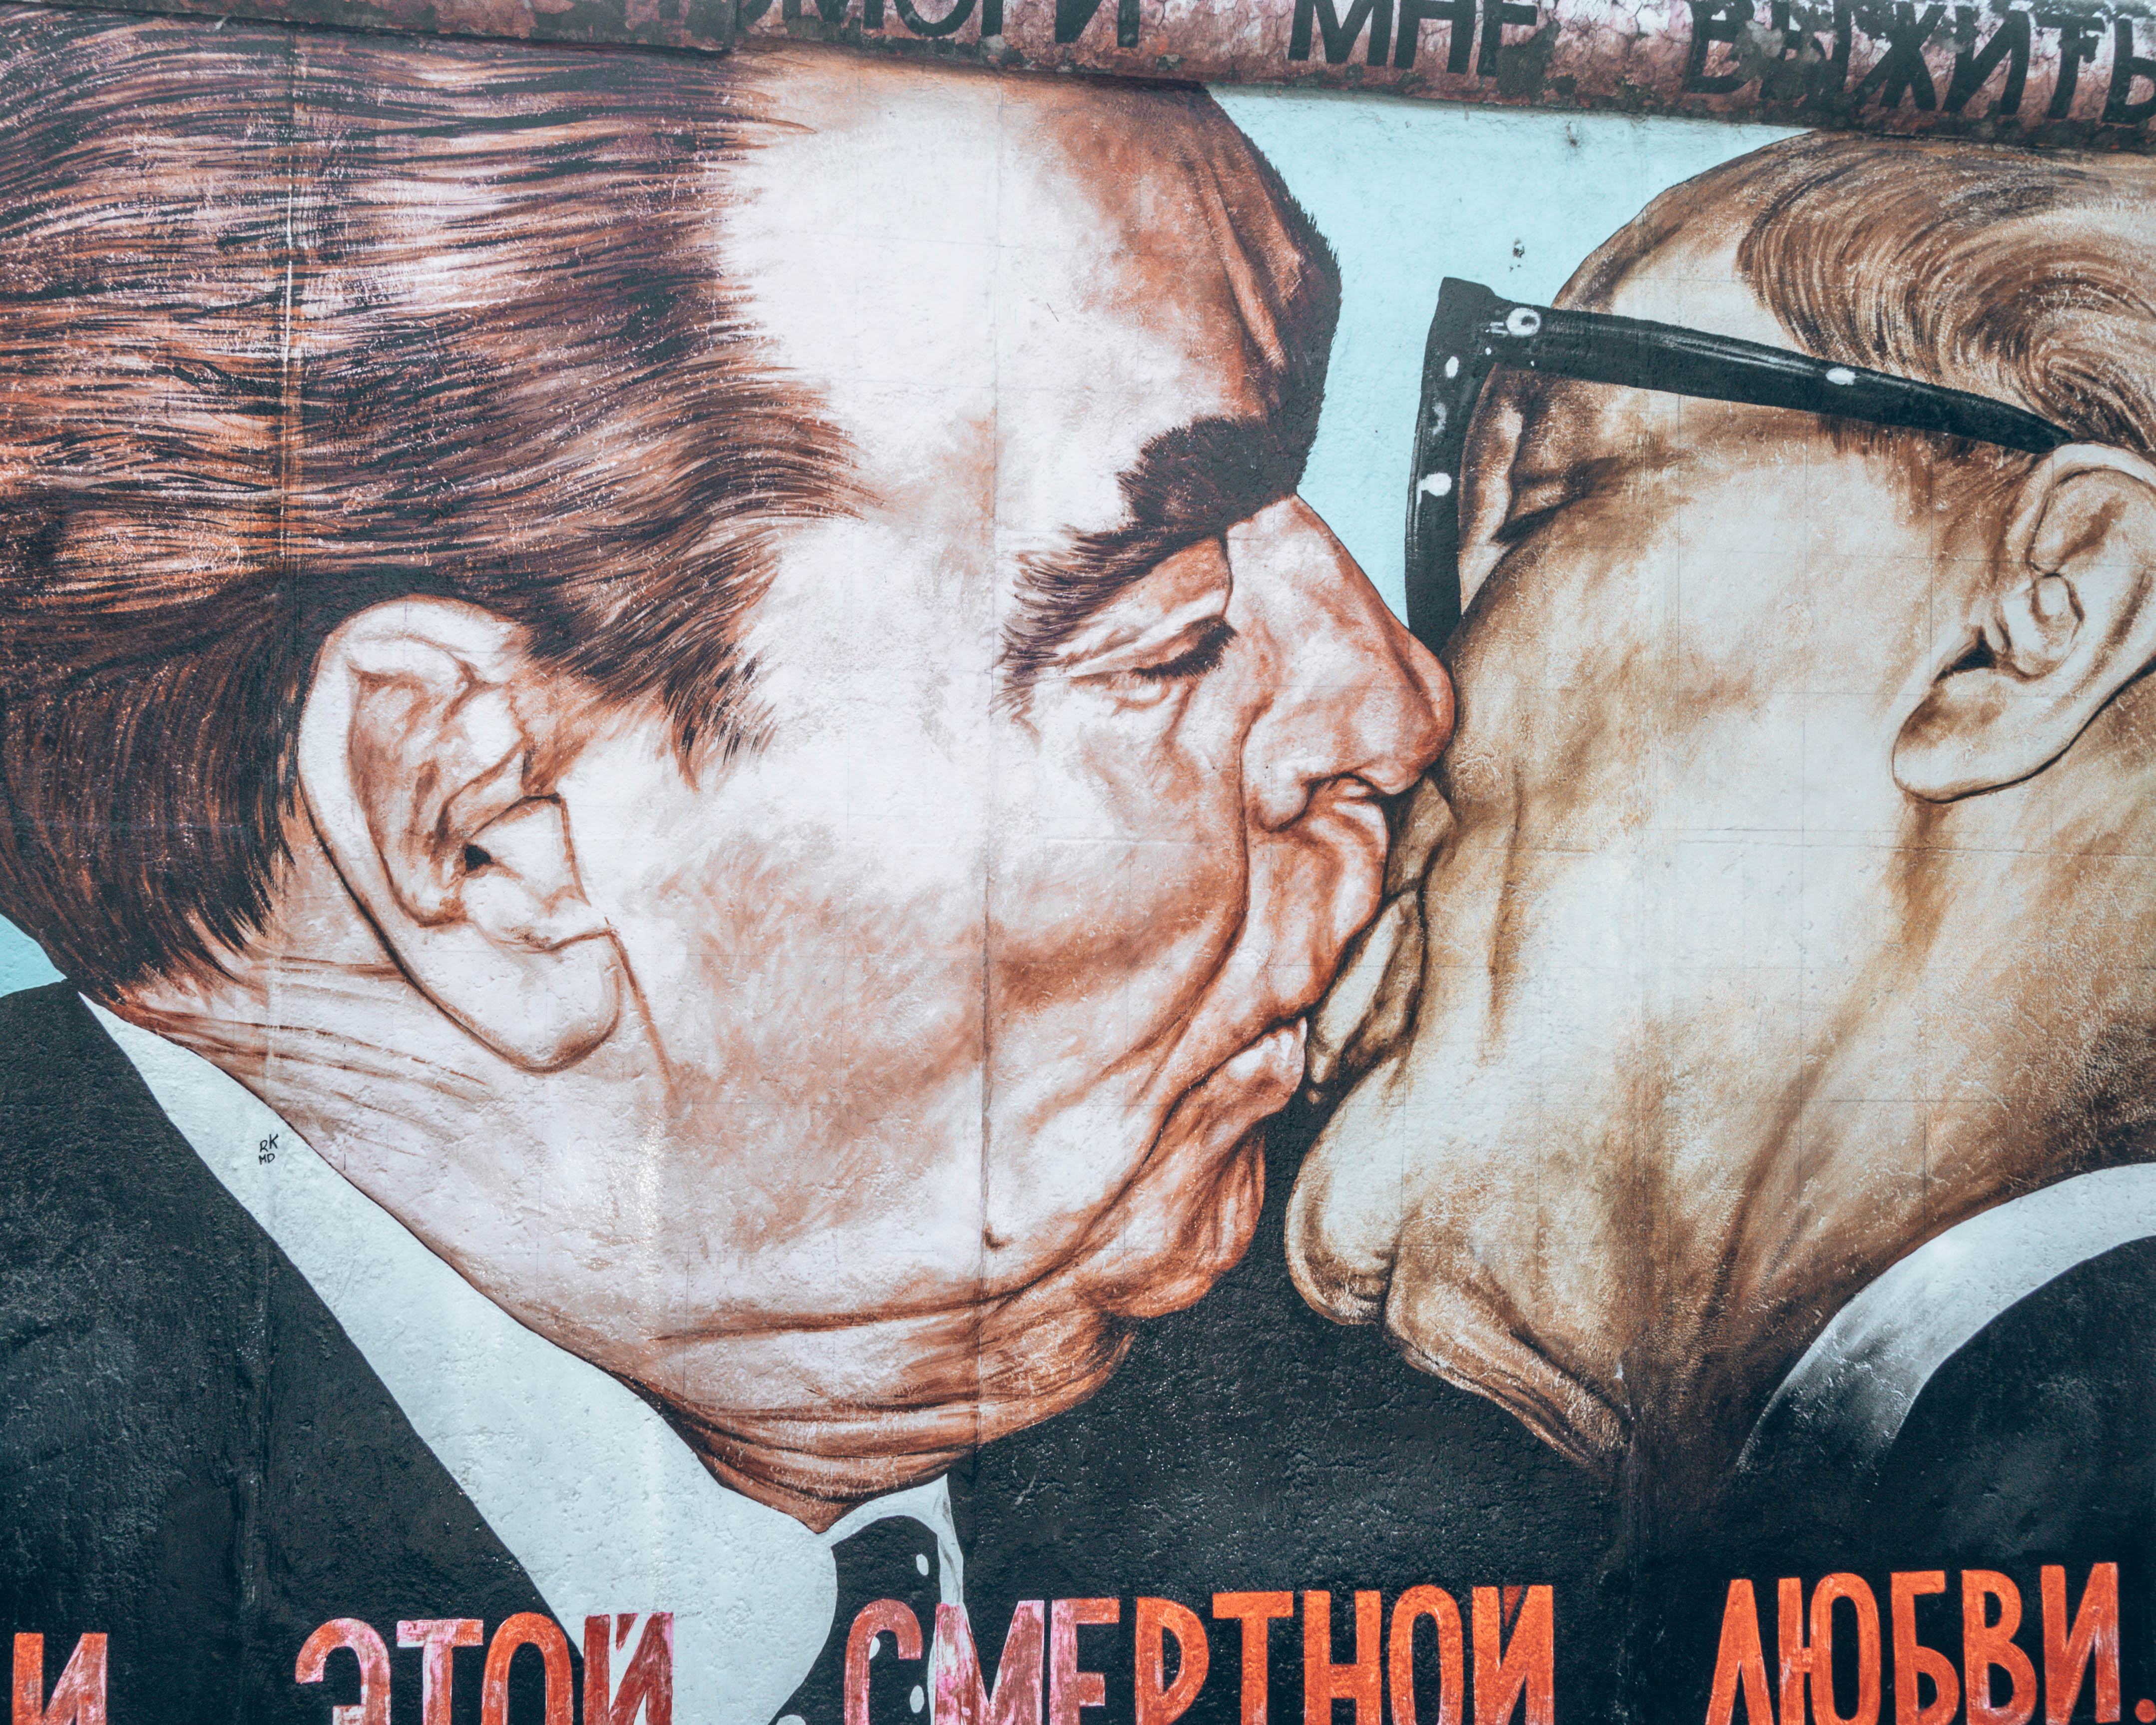 Fraternal kiss Part of the East Side Gallery, street art museum in Berlin